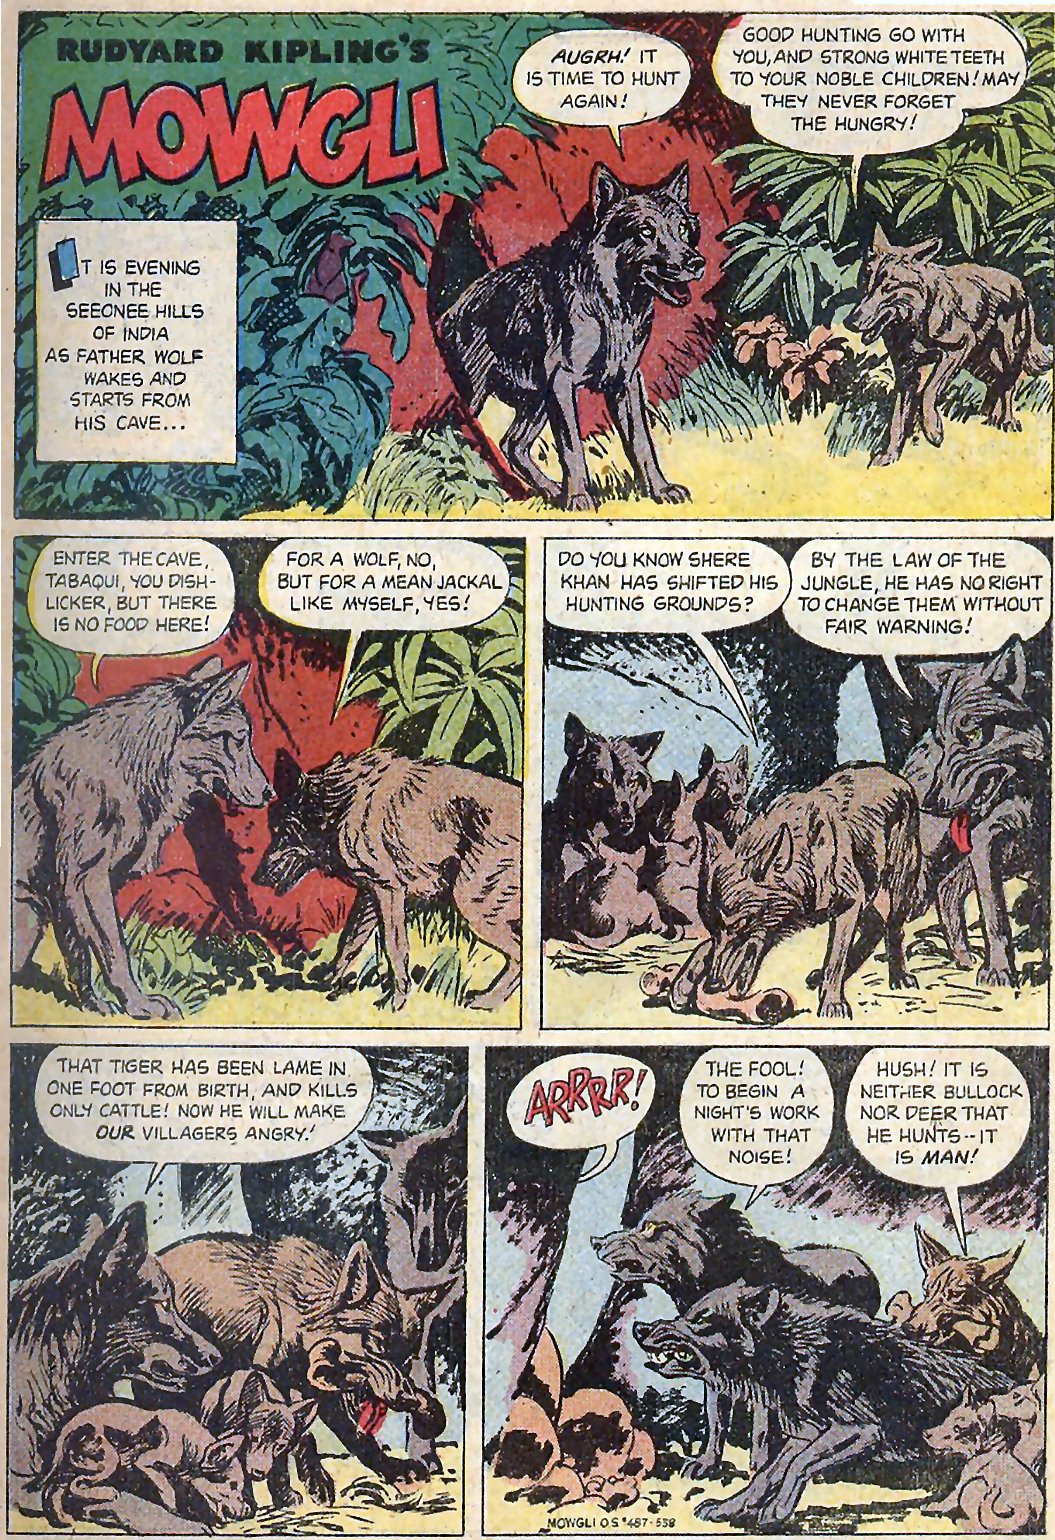 Rudyard Kipling's Mowgli: Jungle Book #1 page 1